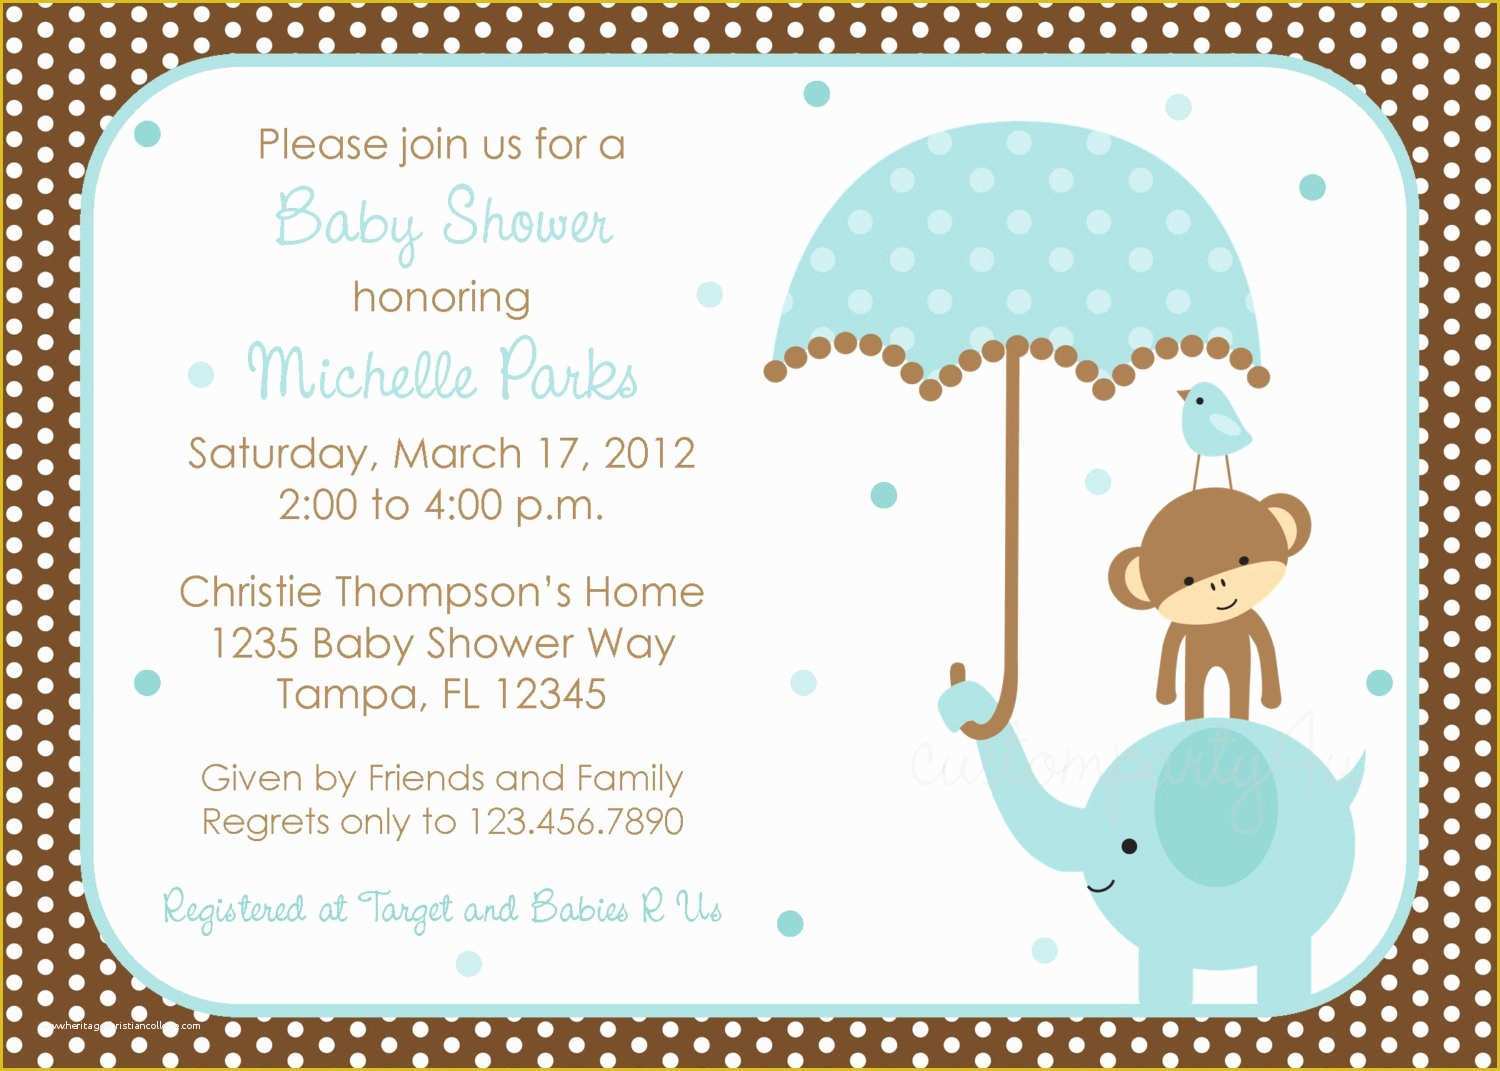 Free Printable Baby Shower Invitations Templates for Boys Of Free Baby Boy Shower Invitations Templates Baby Boy